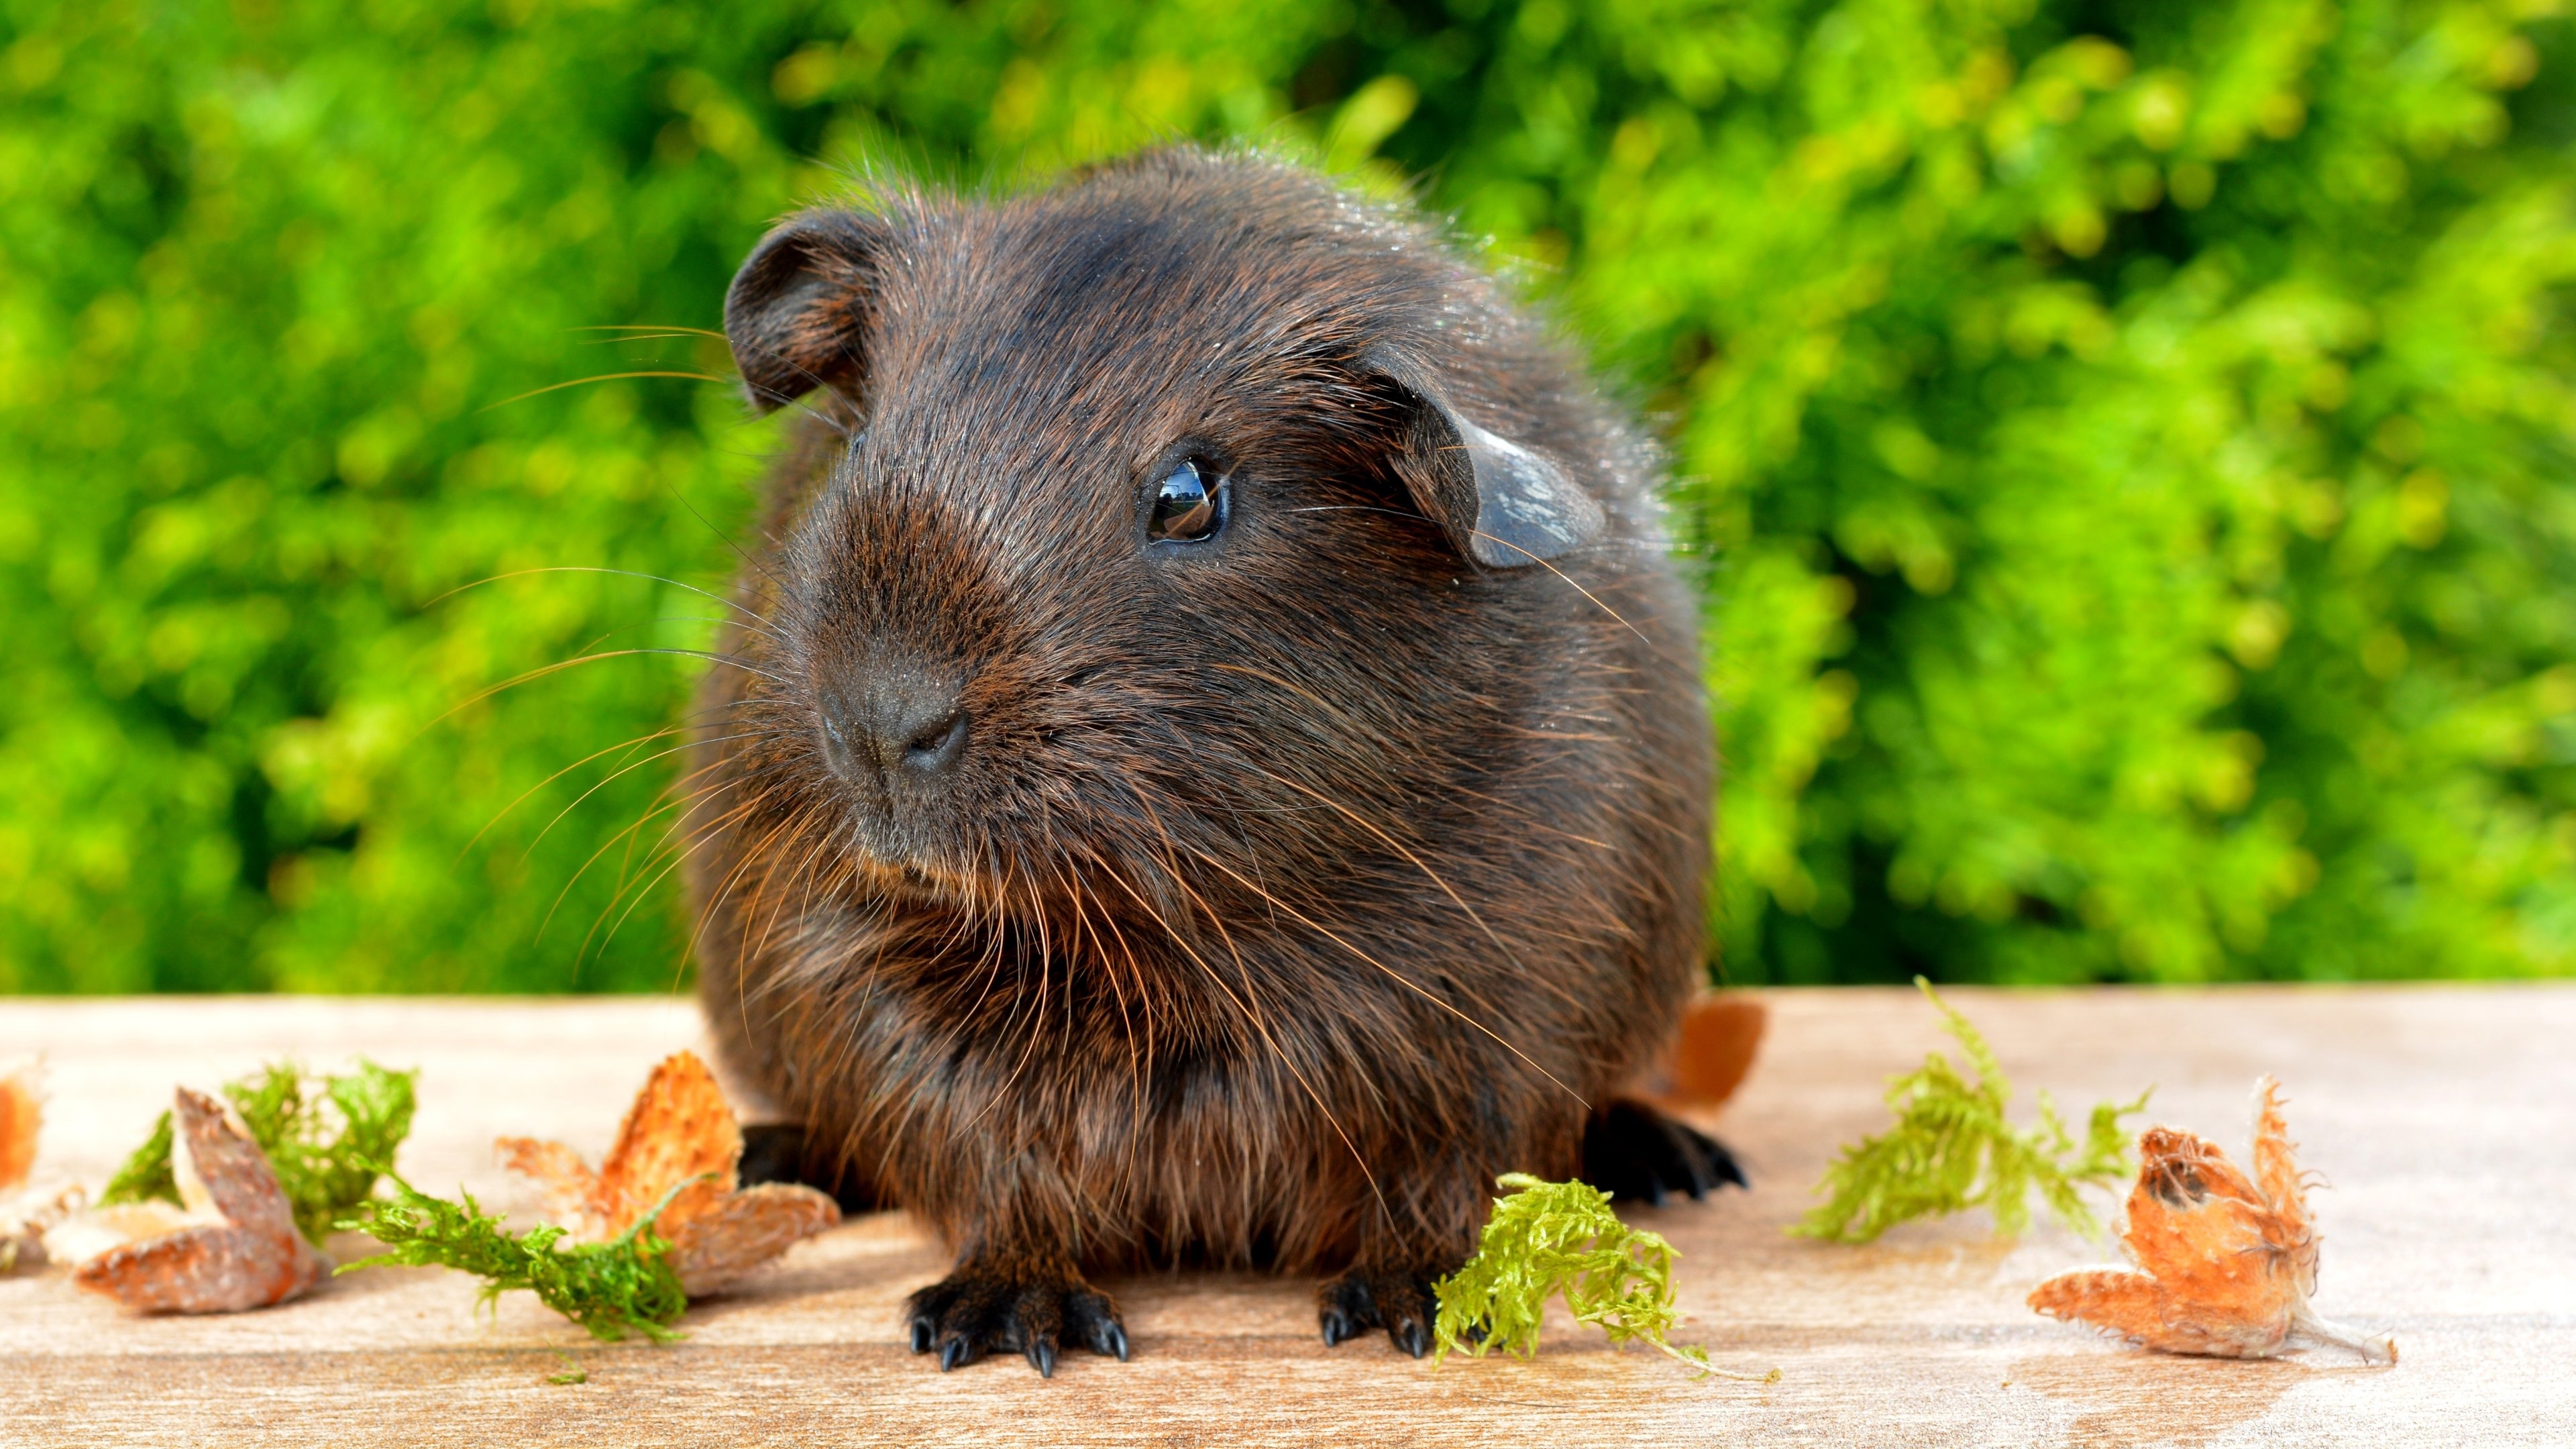 Guinea Pig, HD wallpapers, Adorable companions, Cute rodents, 3840x2160 4K Desktop